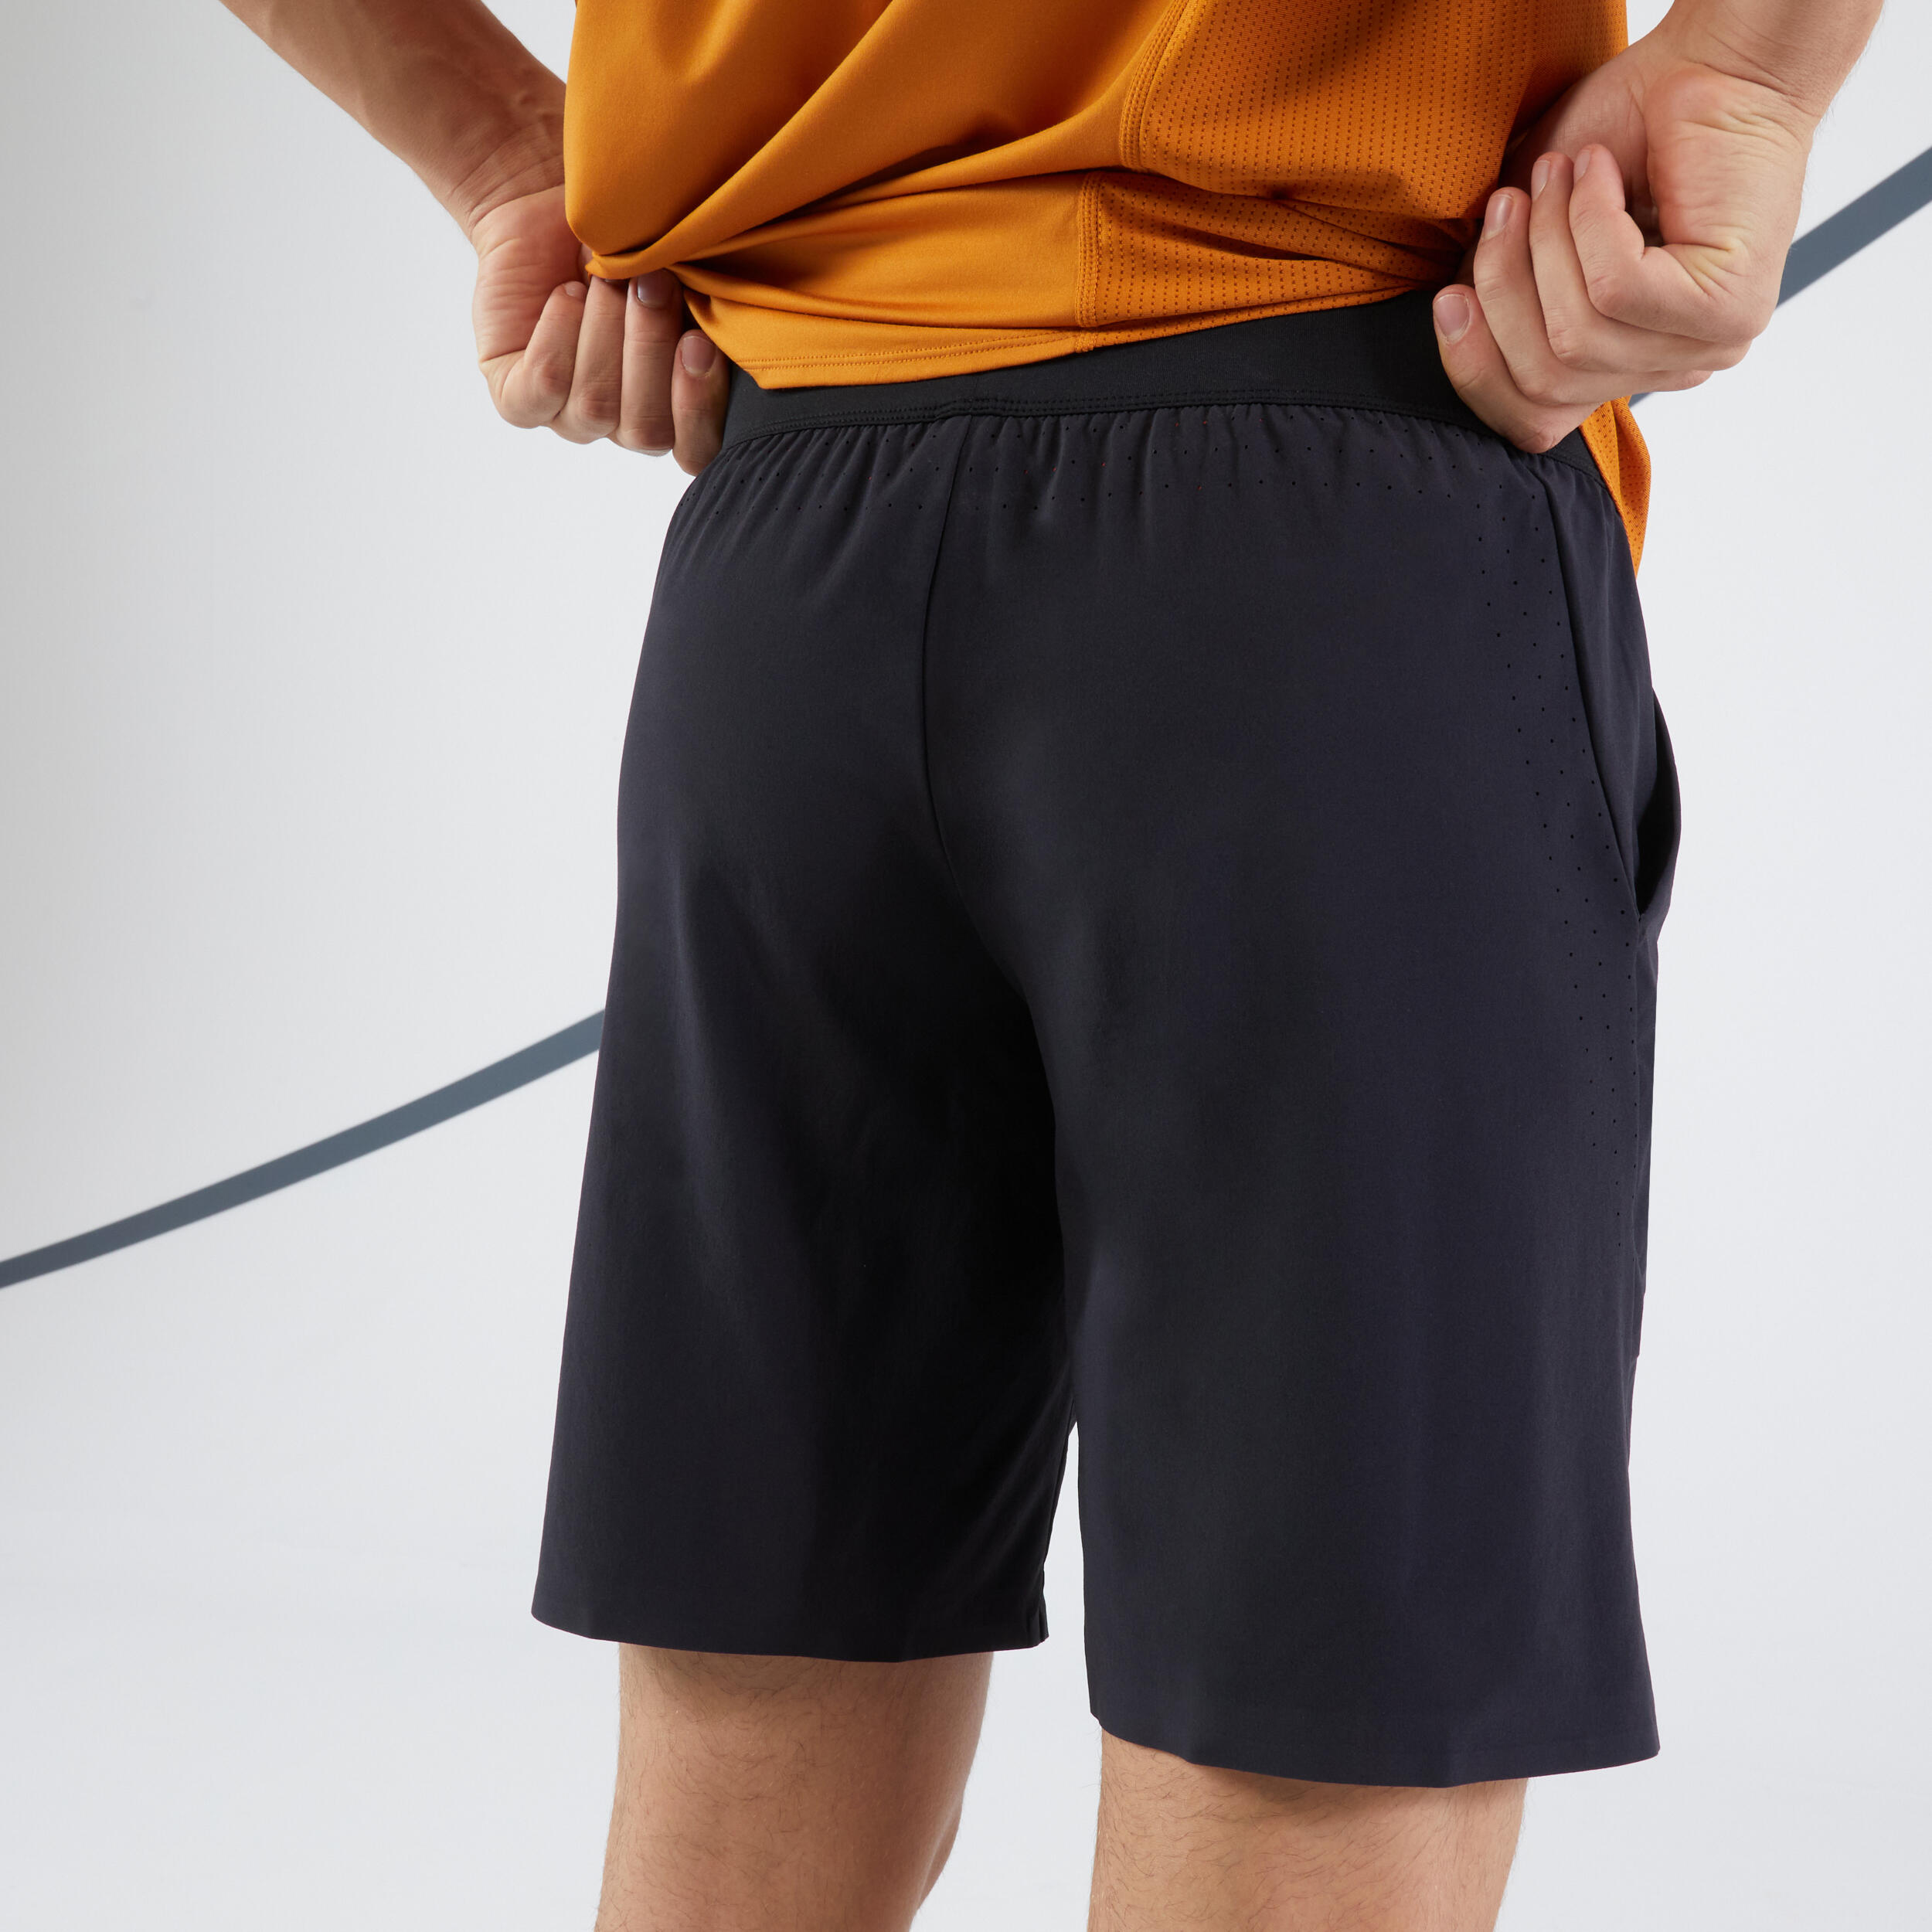 Men's Tennis Shorts - Dry Black - ARTENGO